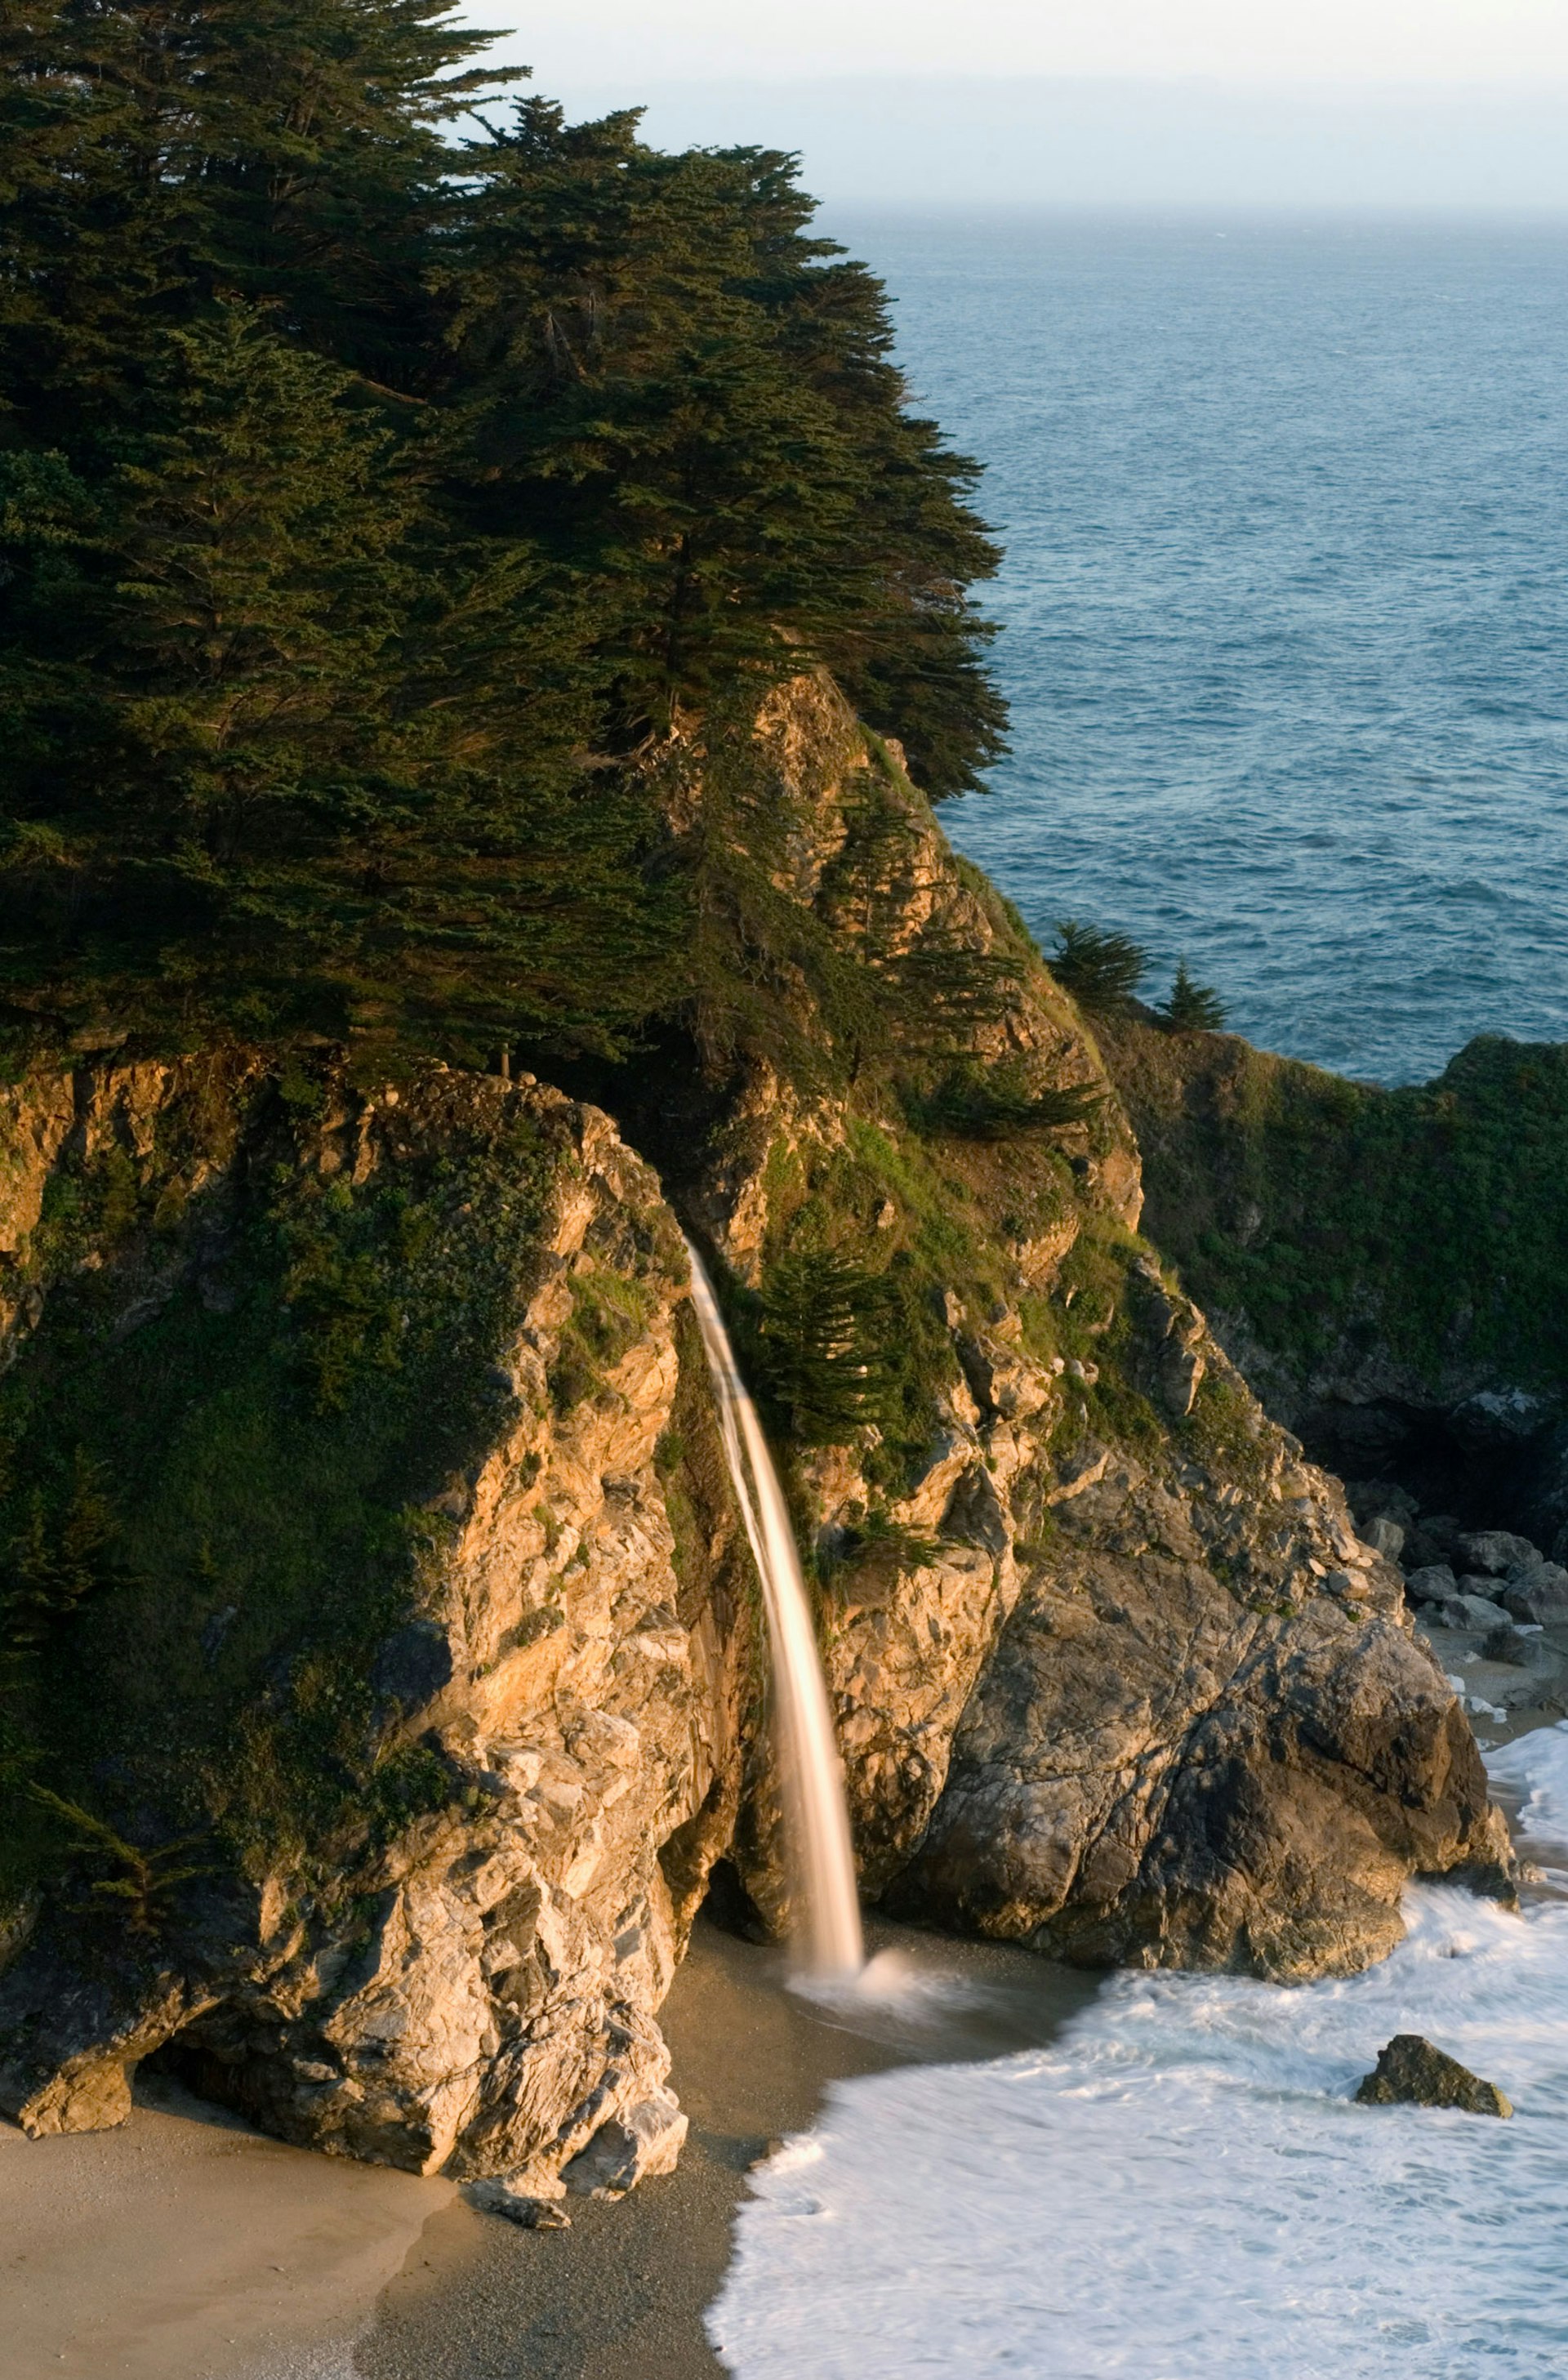 Trees grow on cliffs where a waterfall drops onto the beach near the Pacific Ocean